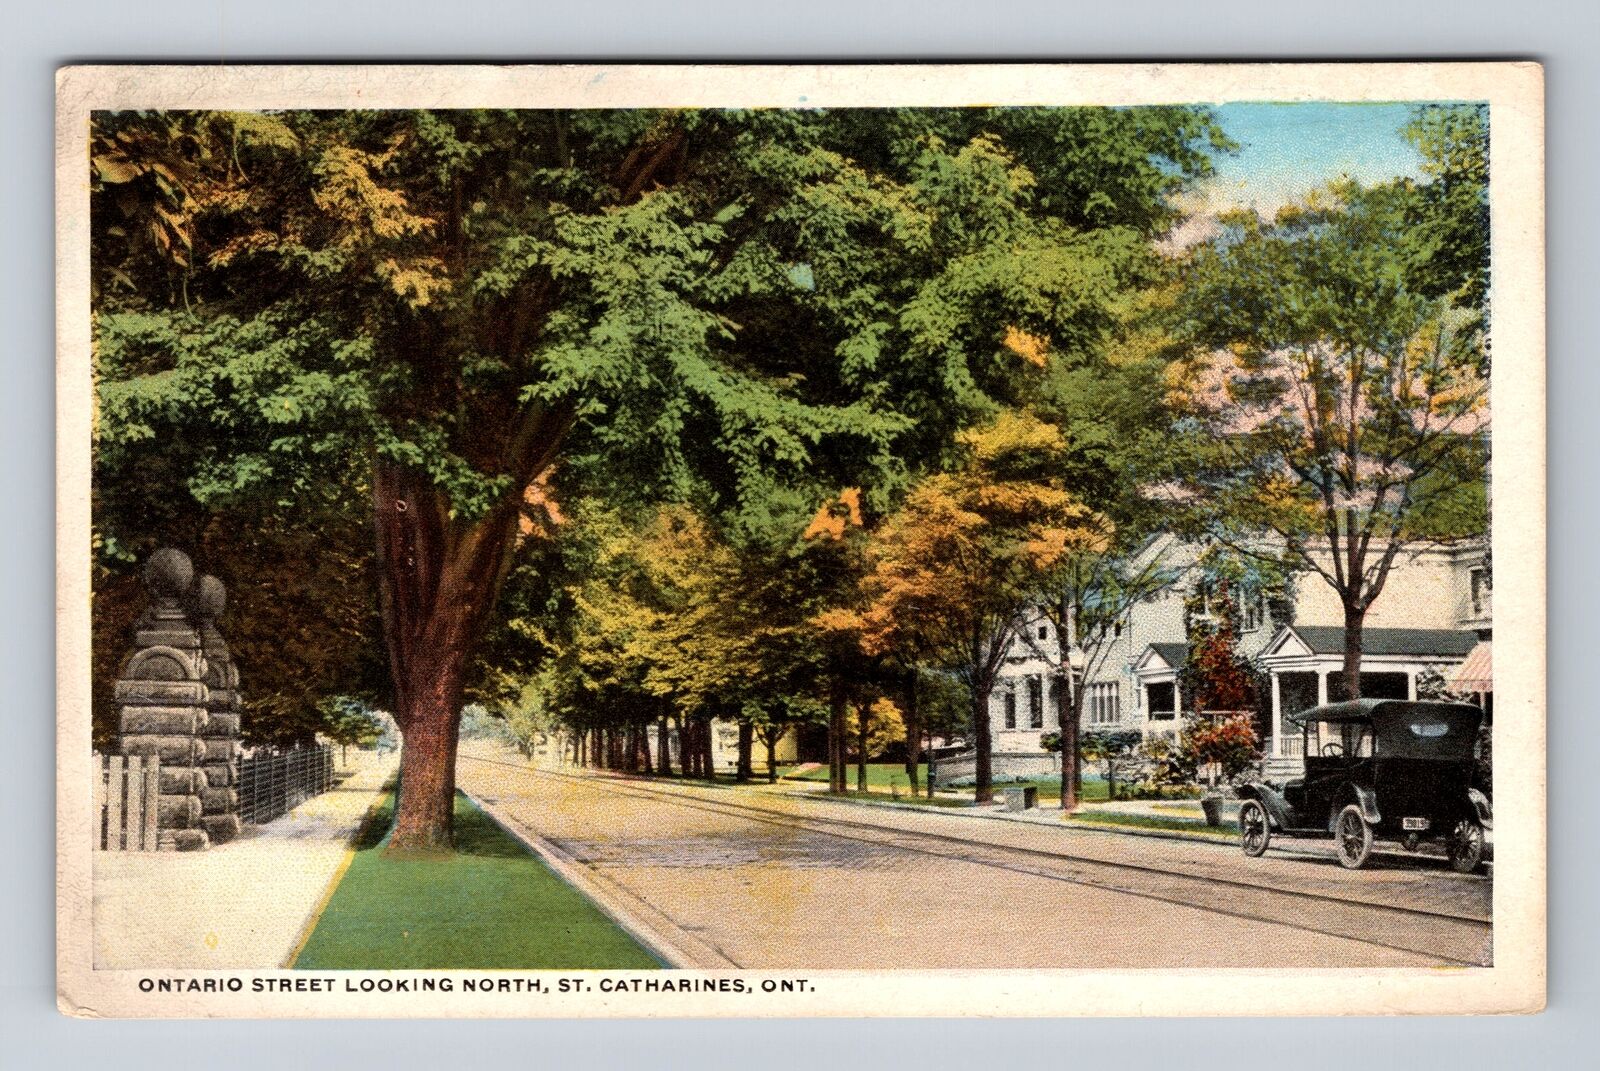 St. Catherines Canada, Ontario Street Looking North, Residences Vintage Postcard